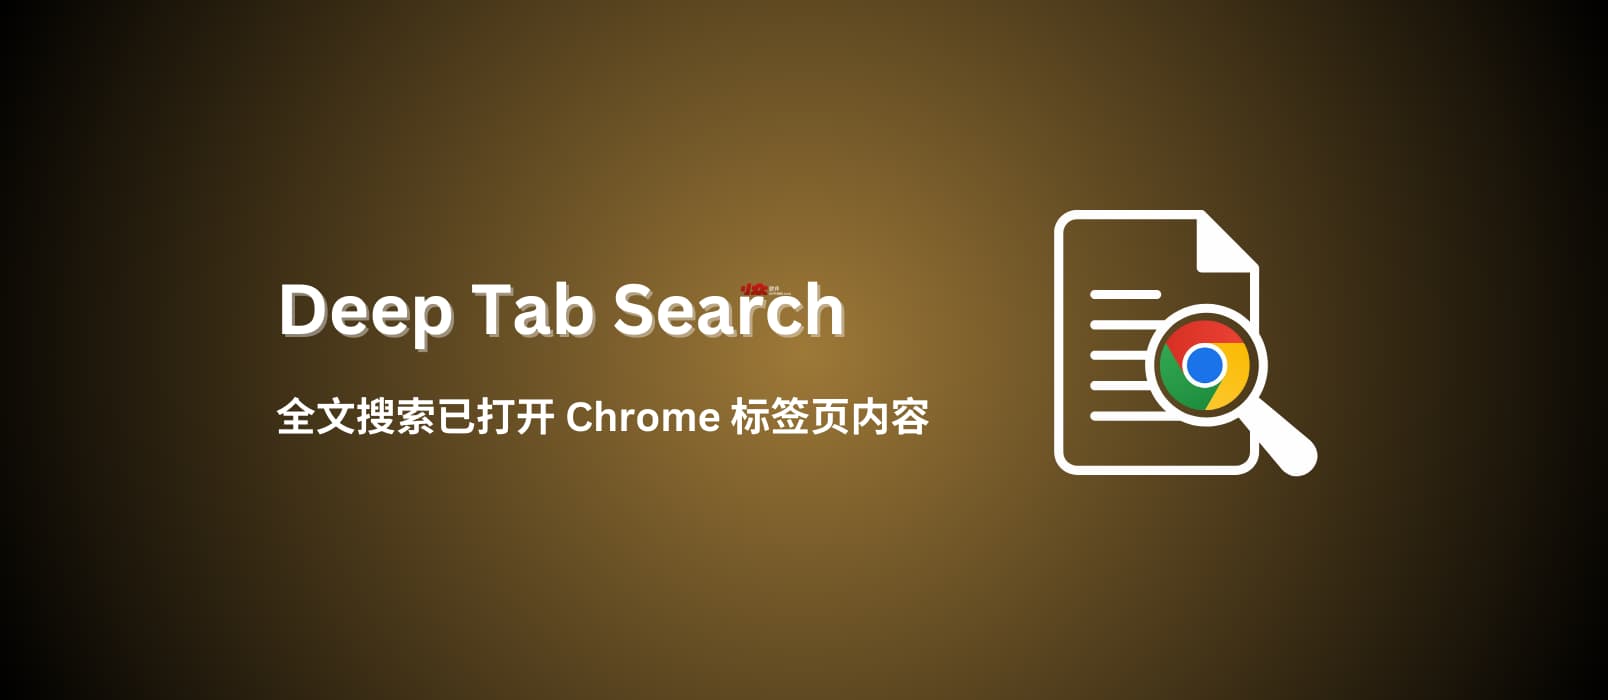 Deep Tab Search -  全文搜索已打开 Chrome 标签页内容，支持中文